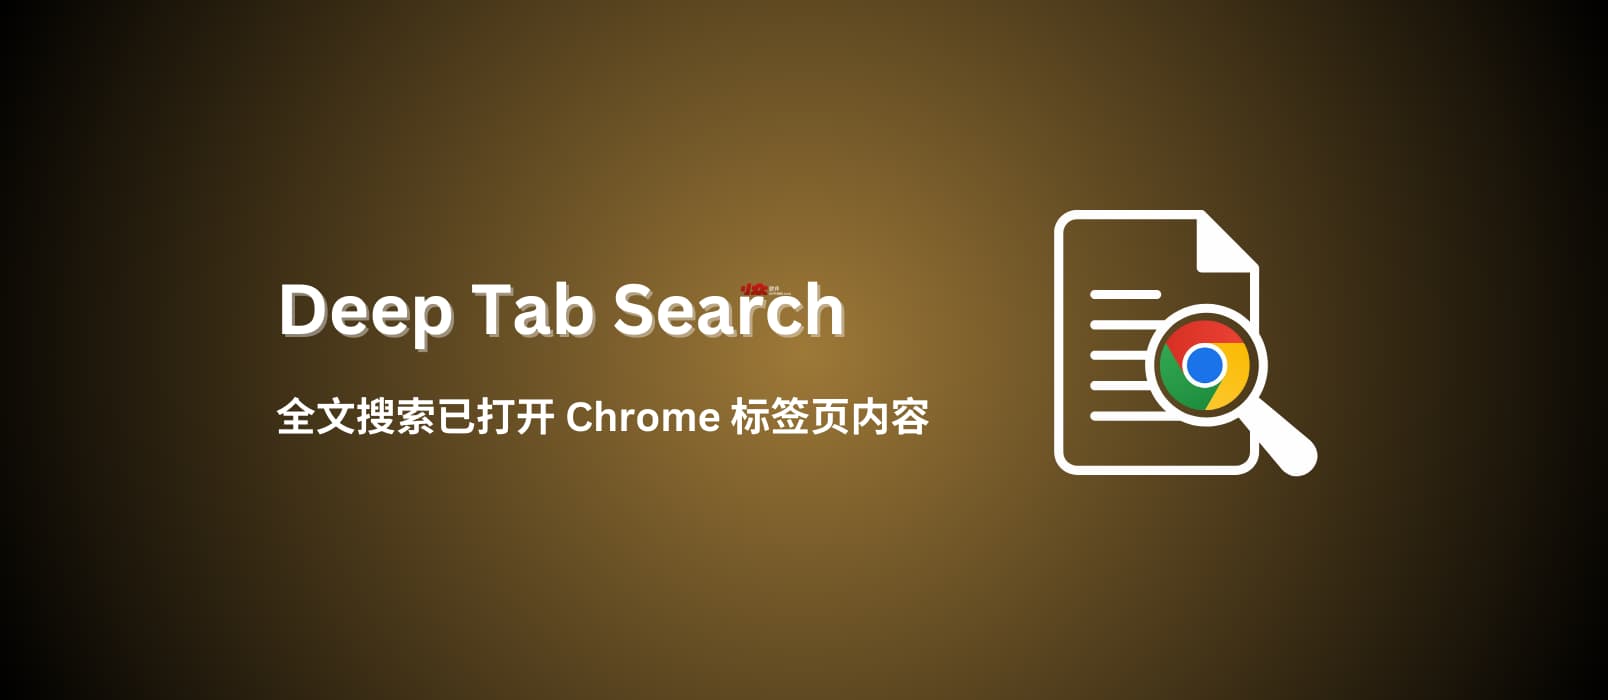 Deep Tab Search -  全文搜索已打开 Chrome 标签页内容，支持中文